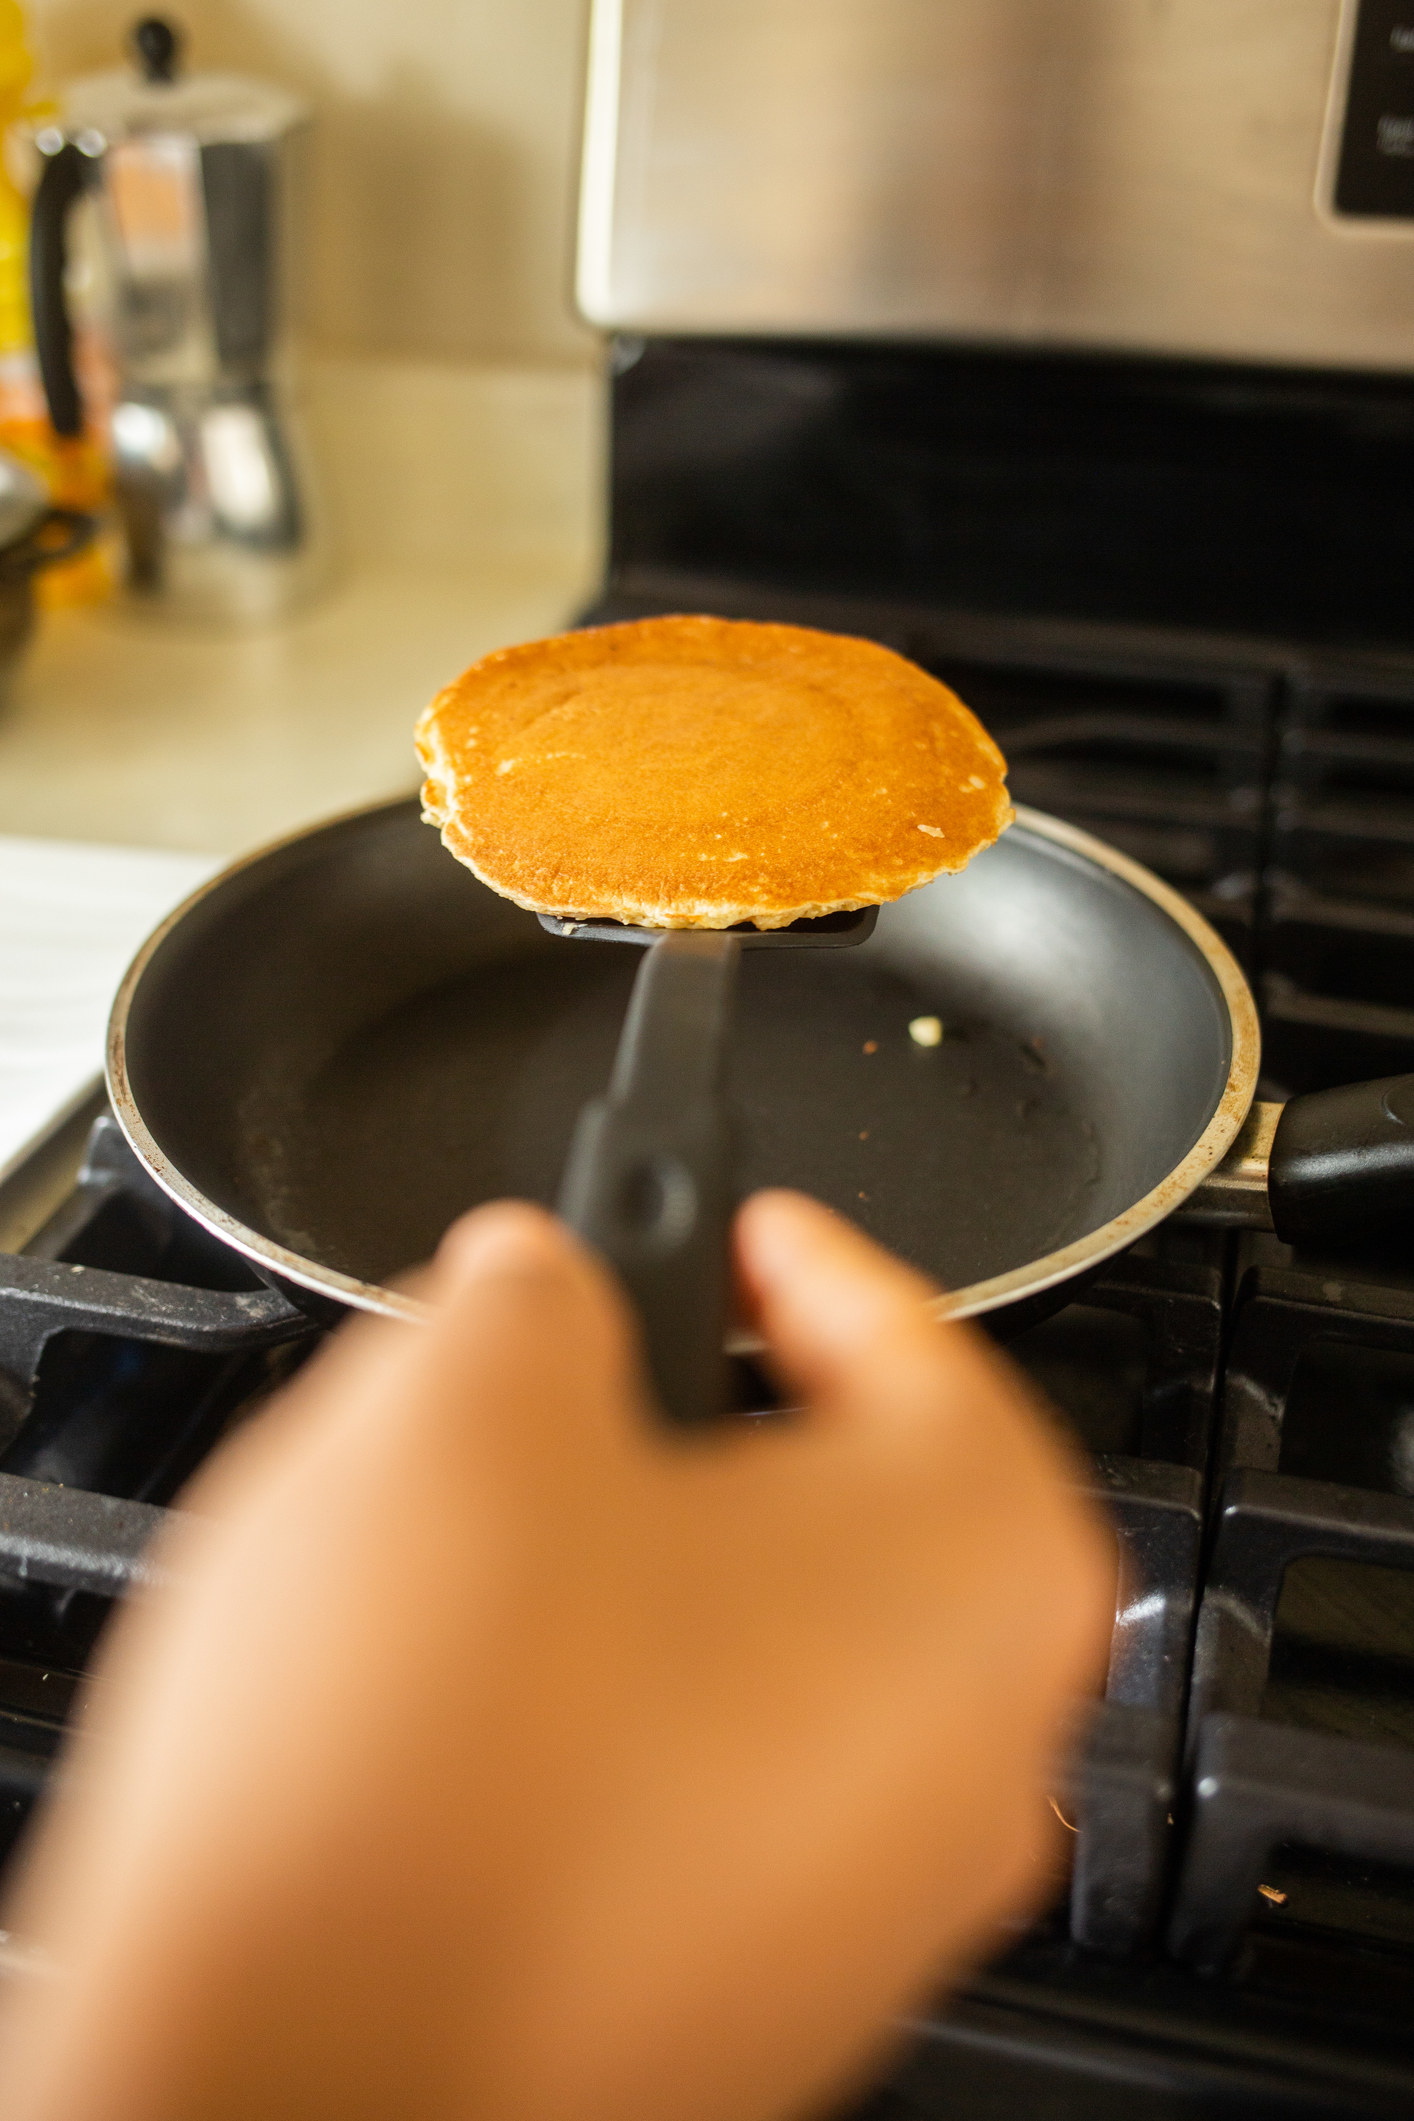 A person taking a pancake out of a pan